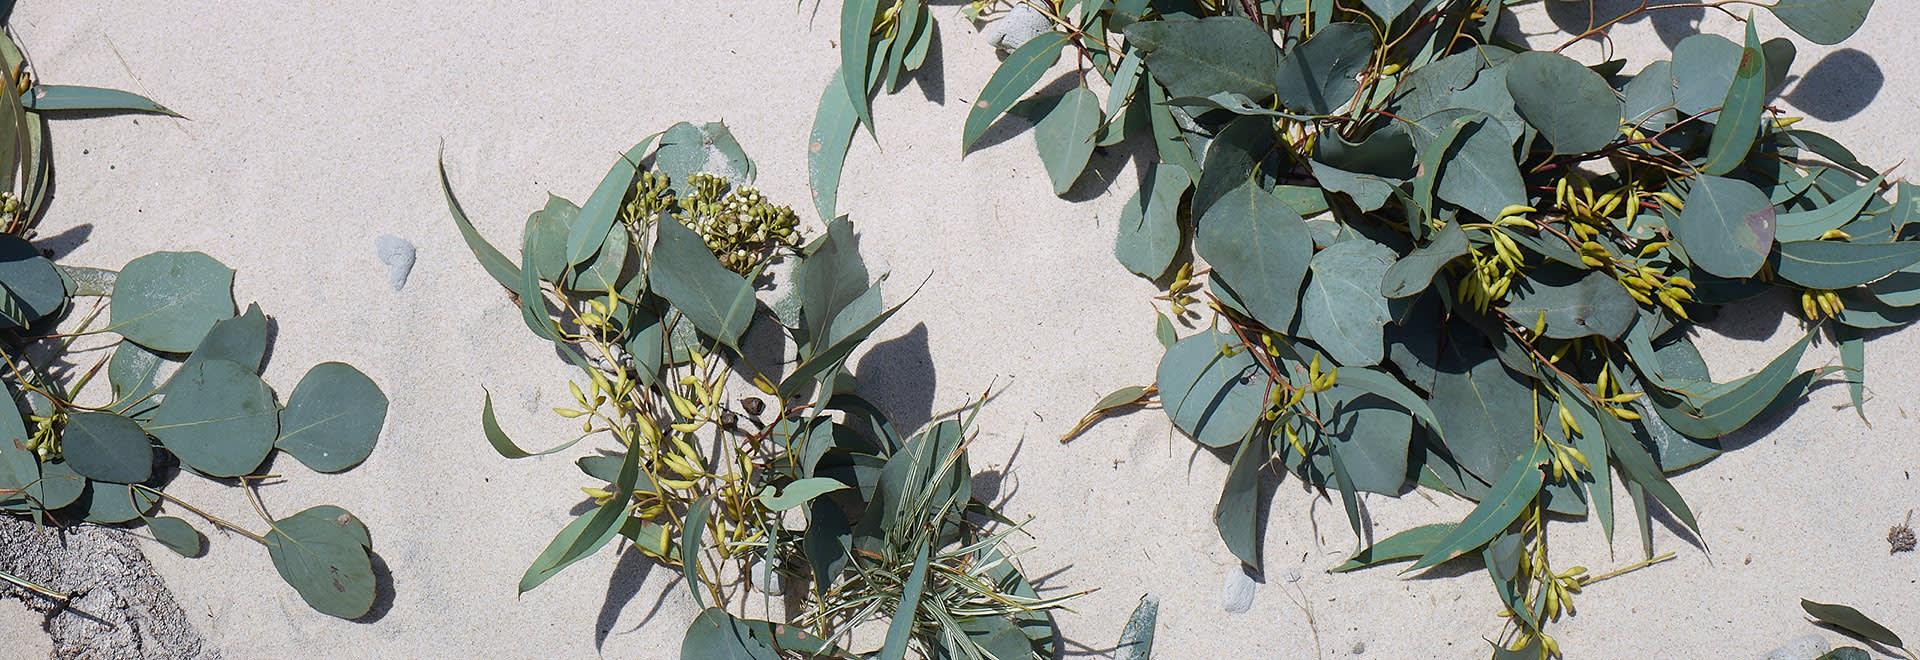 A photo of manuka leaves lying on the sand